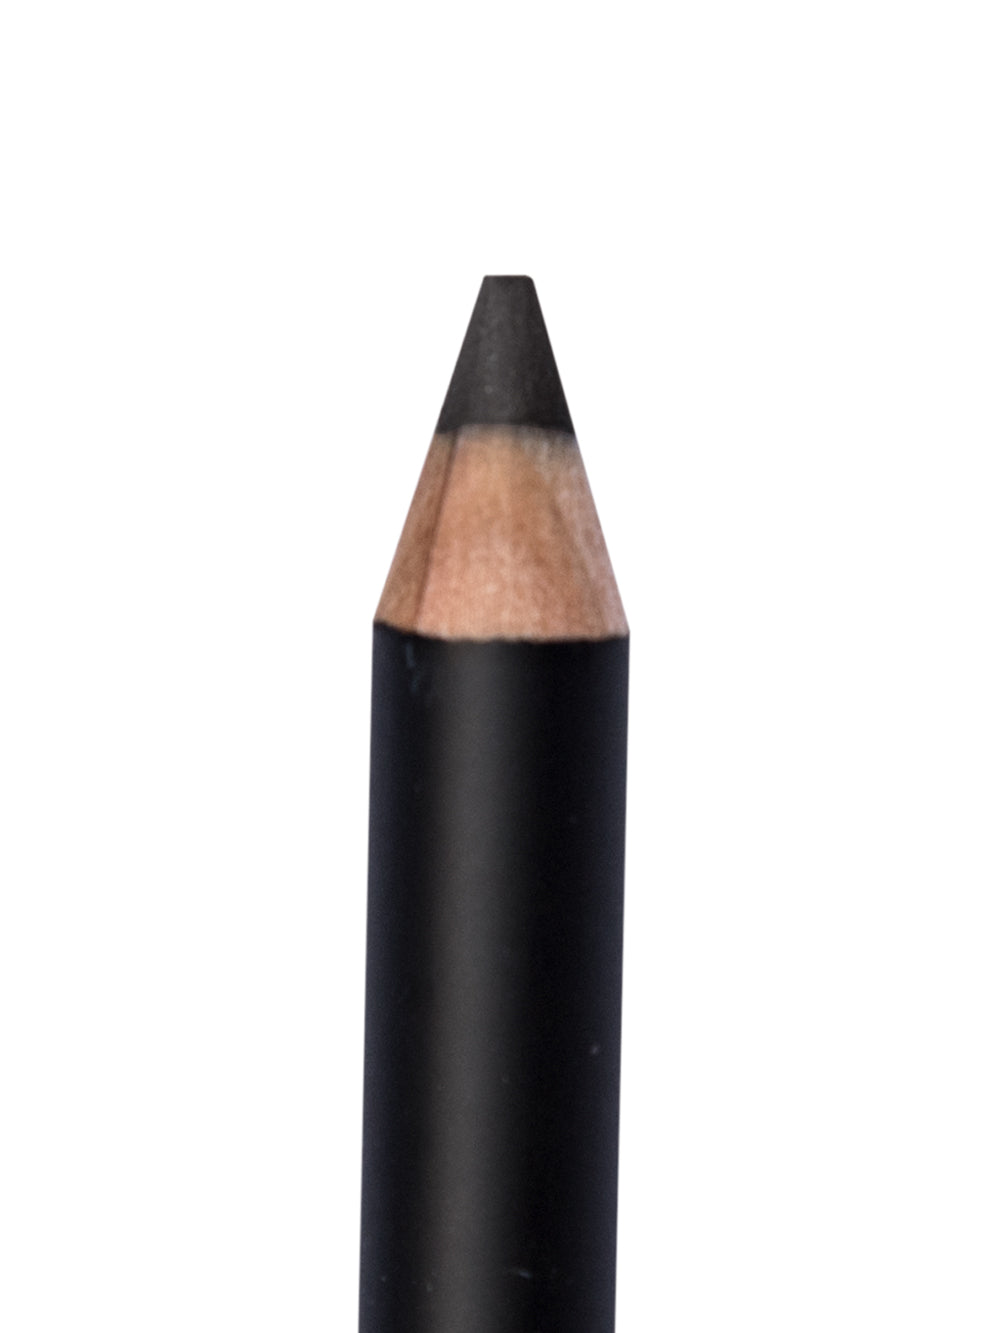 Wet & Dry Eyeliner Pencil - Black